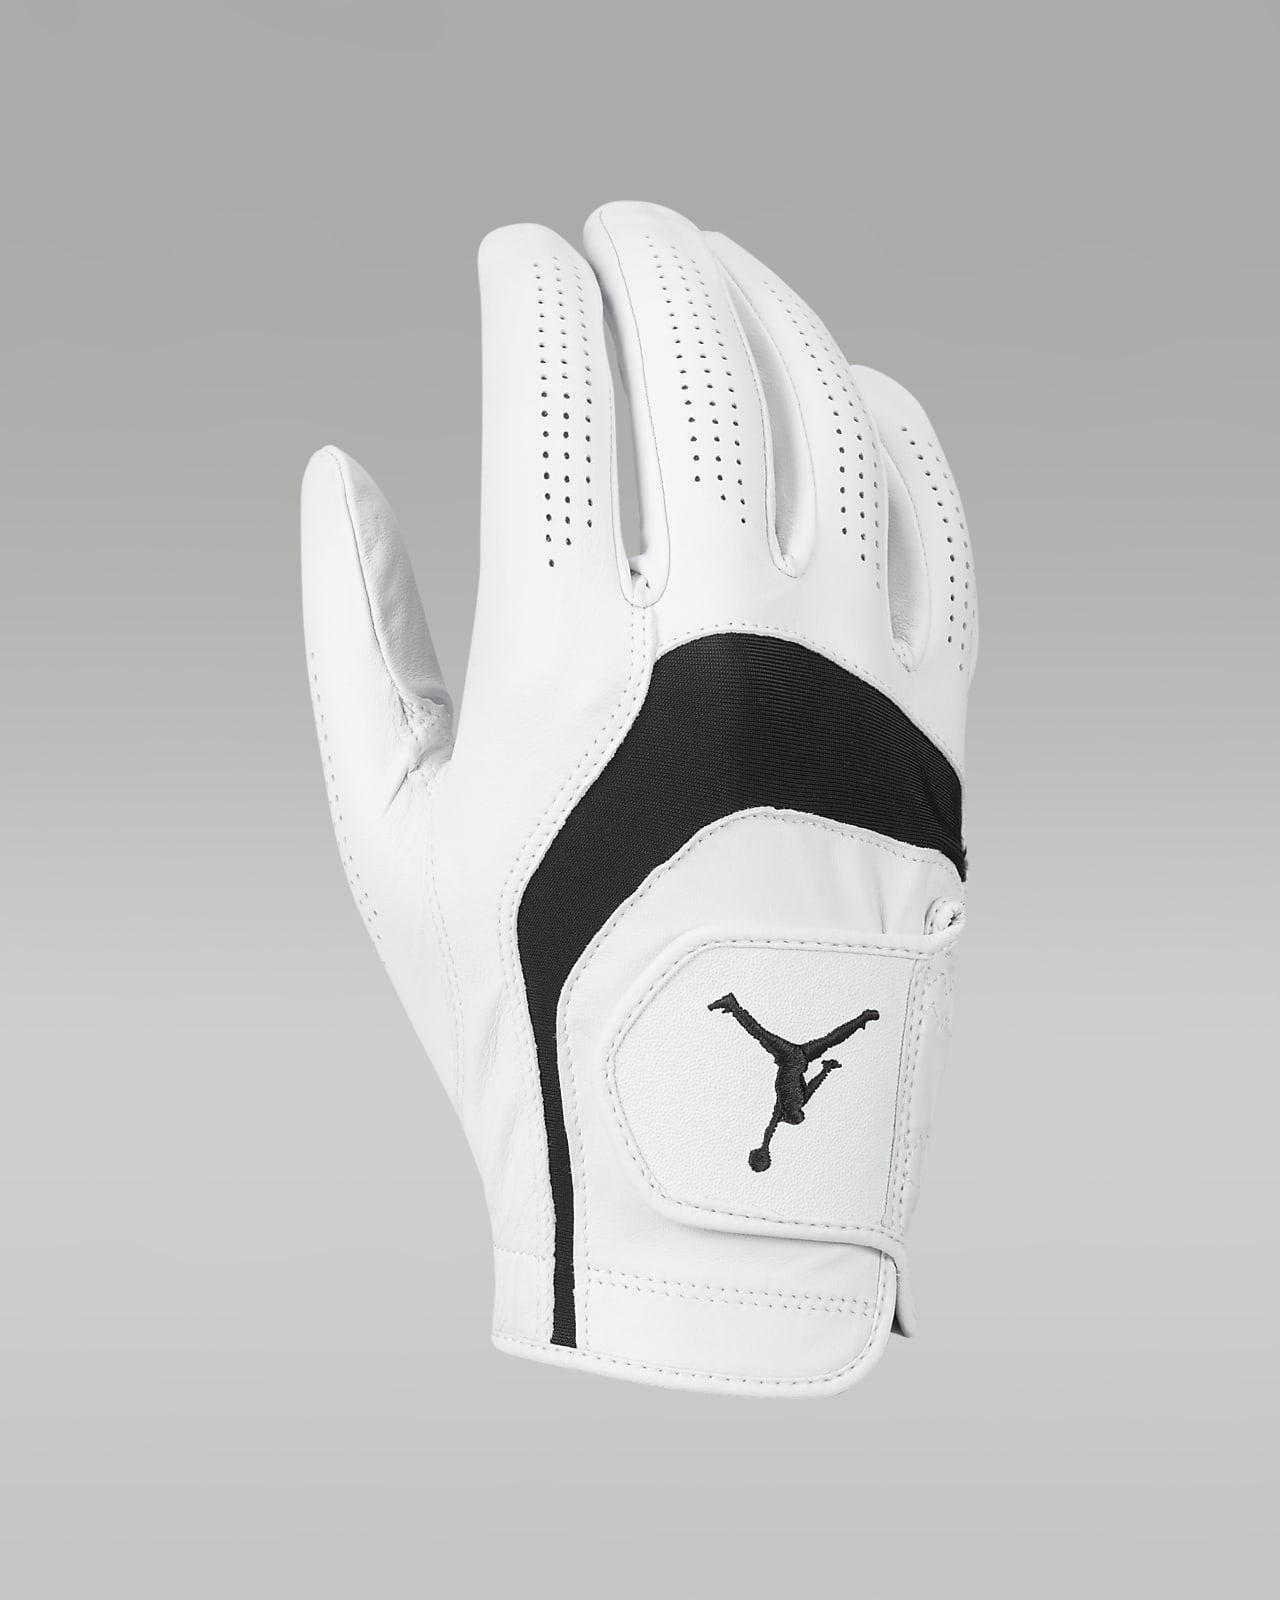 Jordan Tour Regular Golf Glove (Right)